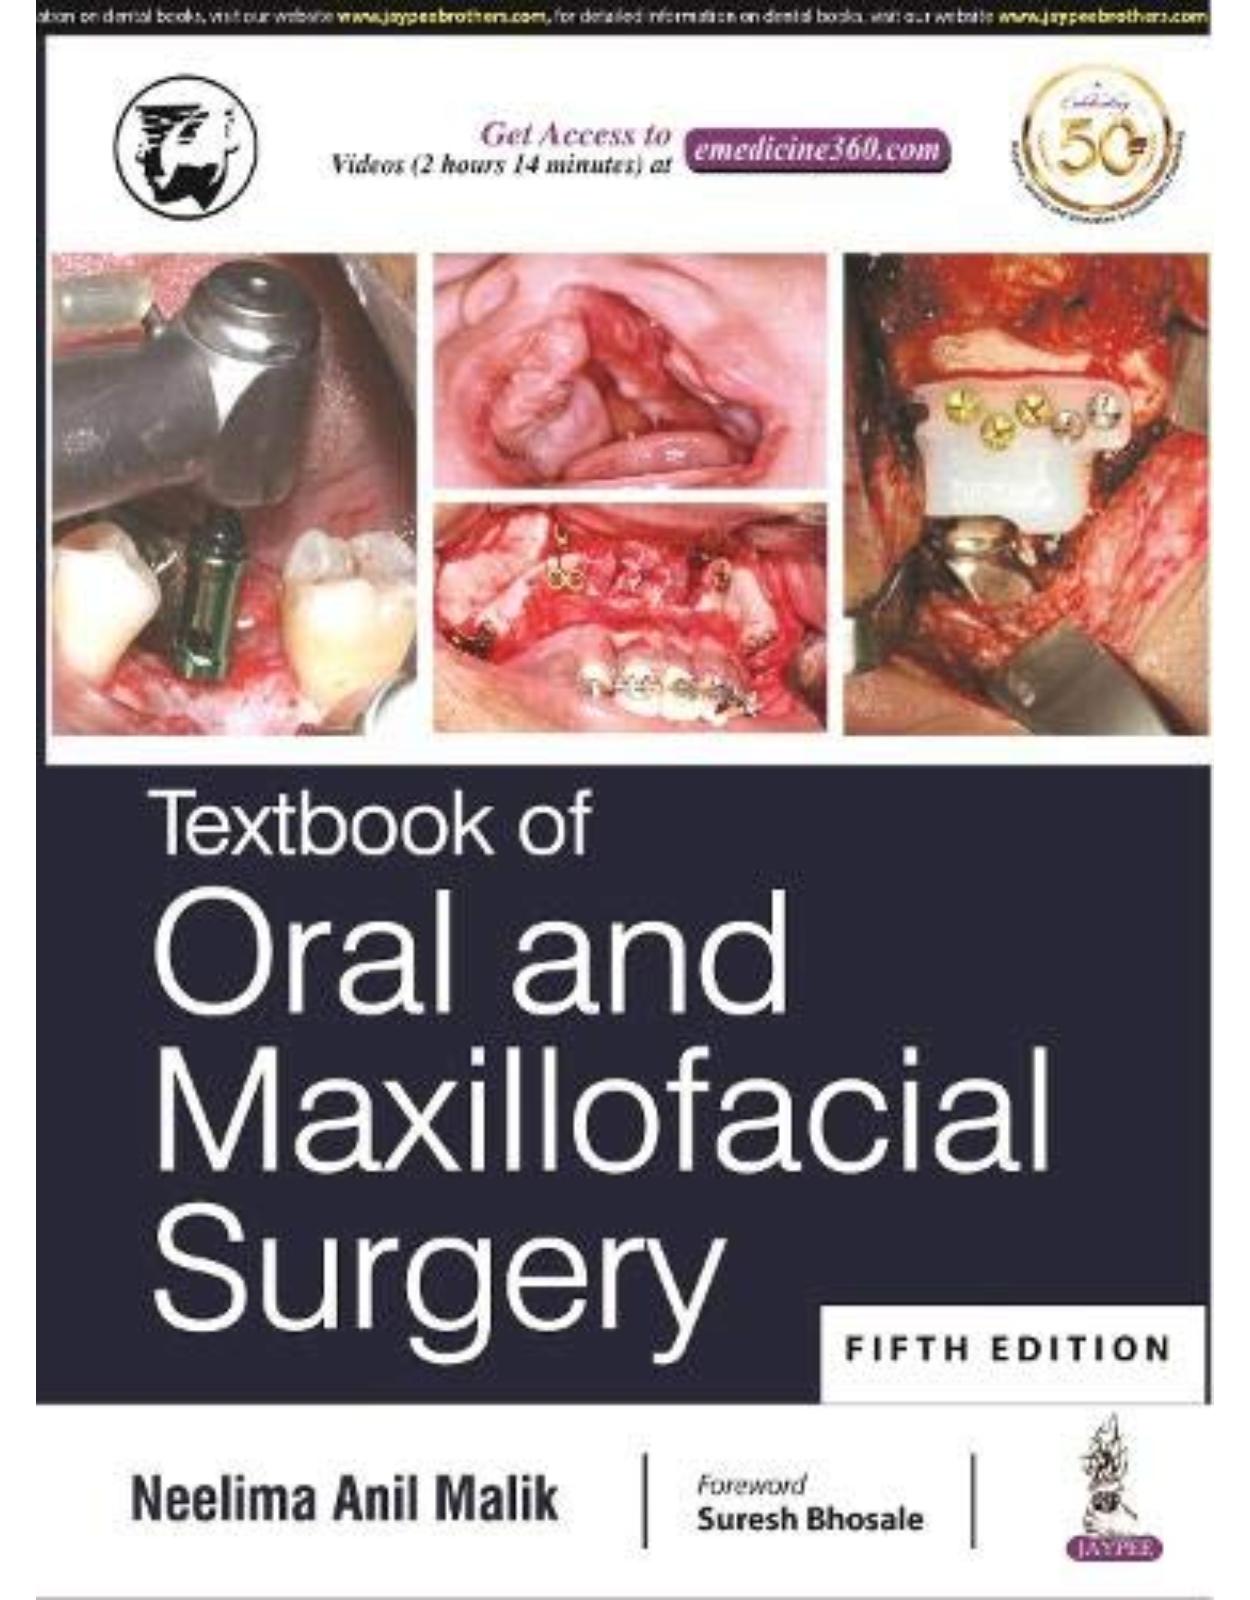 Textbook of Oral and Maxillofacial Surgery